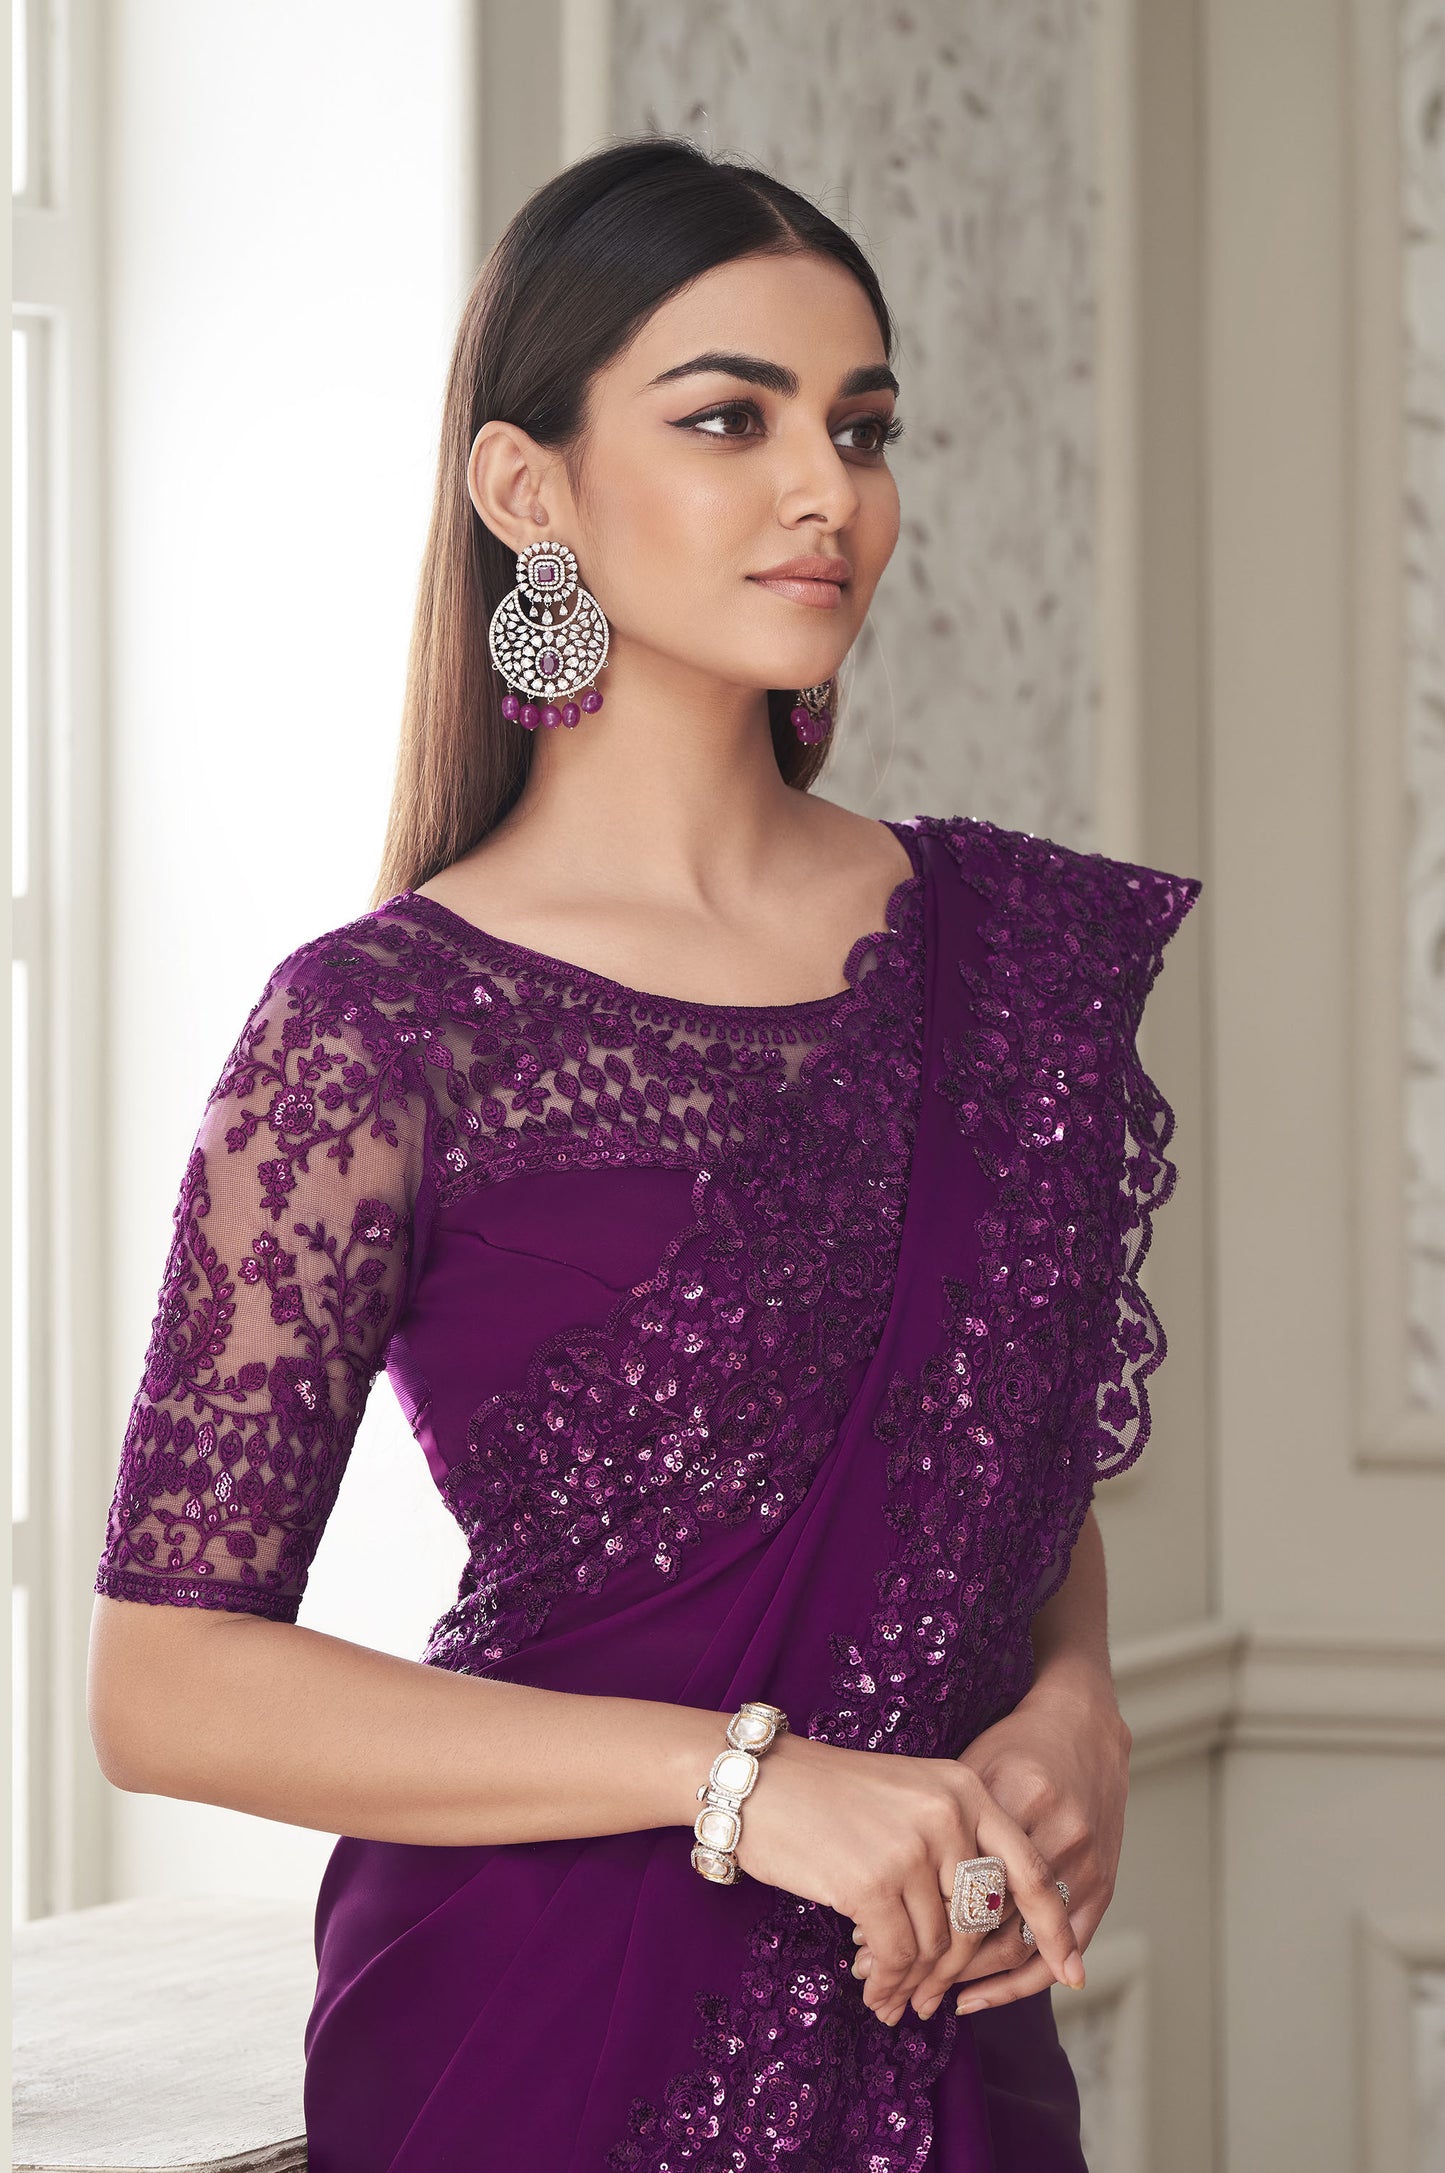 Dark Purple Color Resham Embroidered Satin Silk Saree